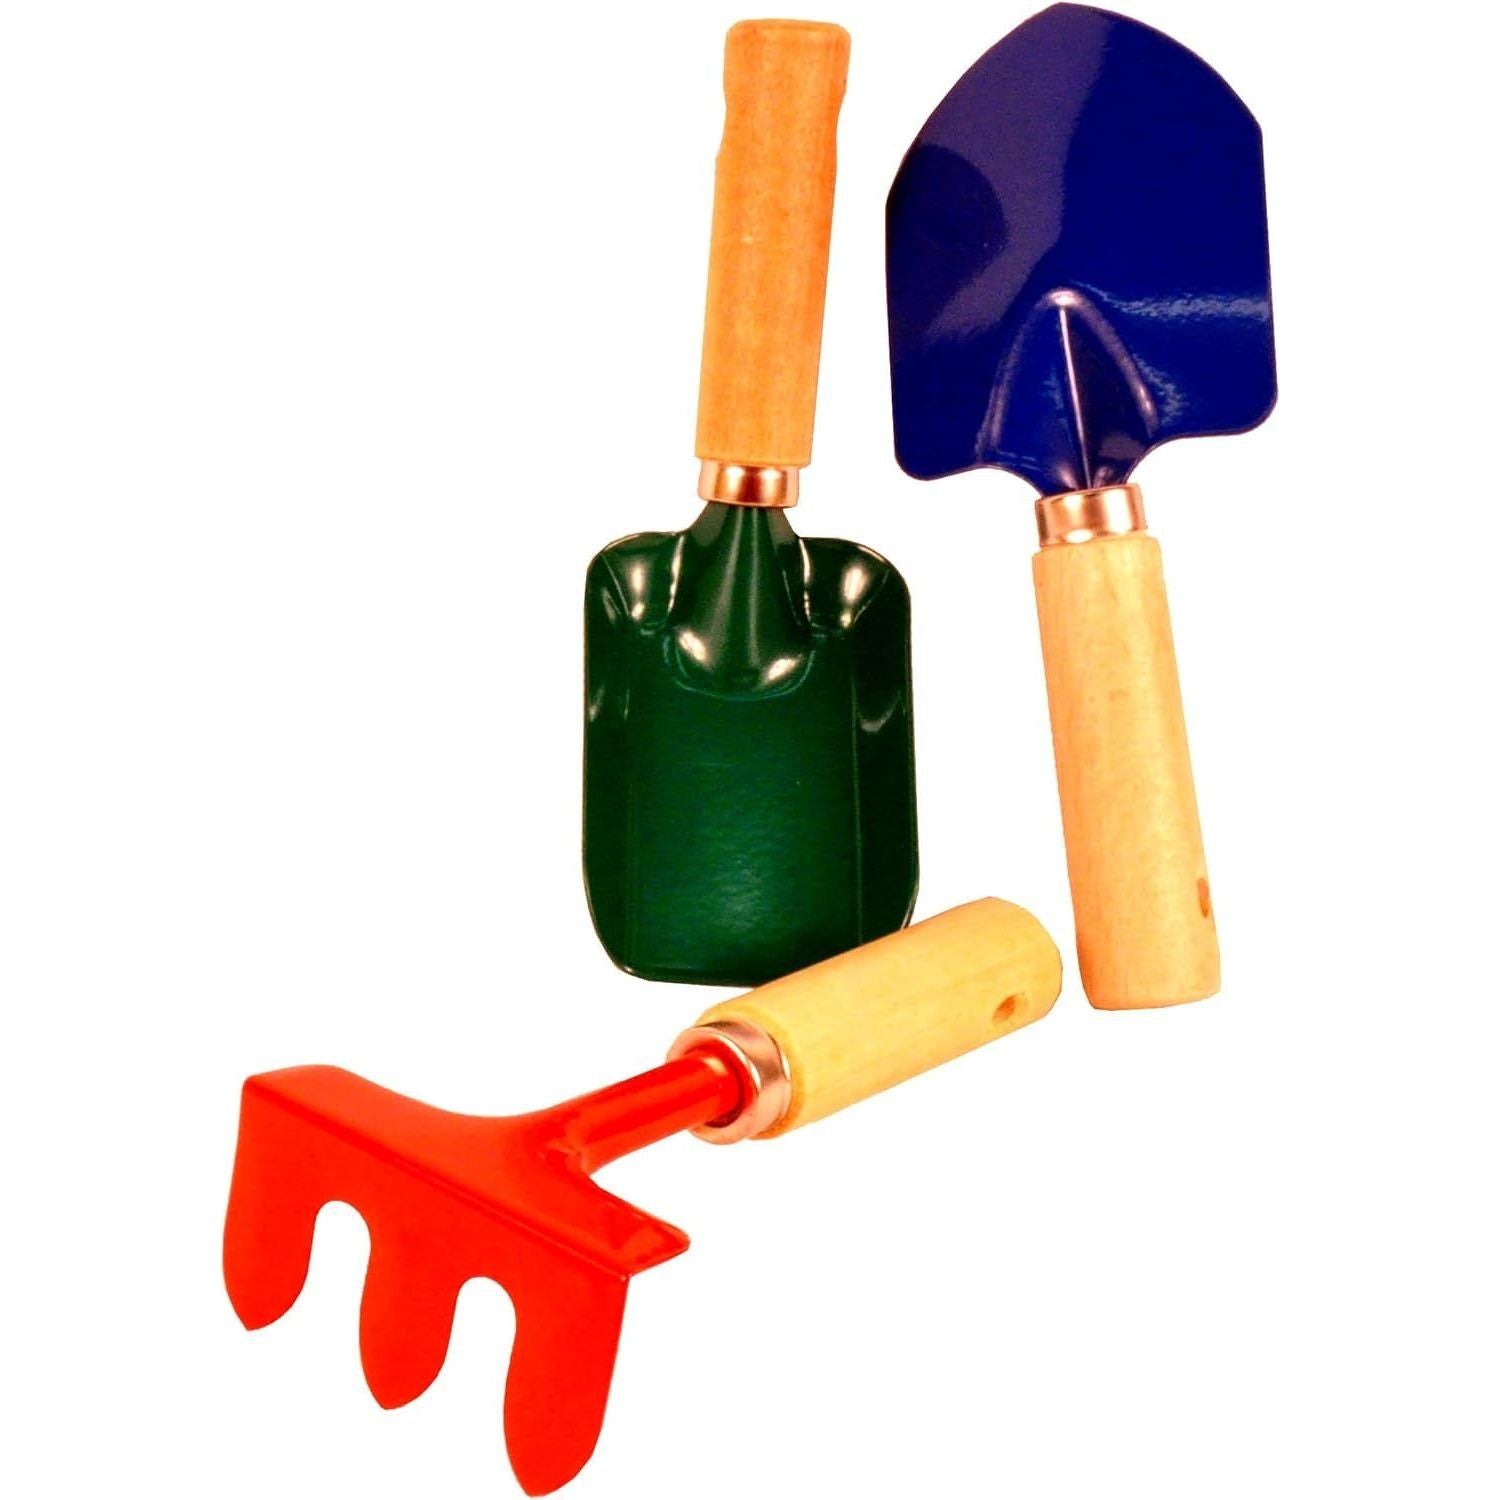 G & F 10012 Justforkids Kids Garden Tools Set with Tote Hand Rake Shovel Trowel,Assorted